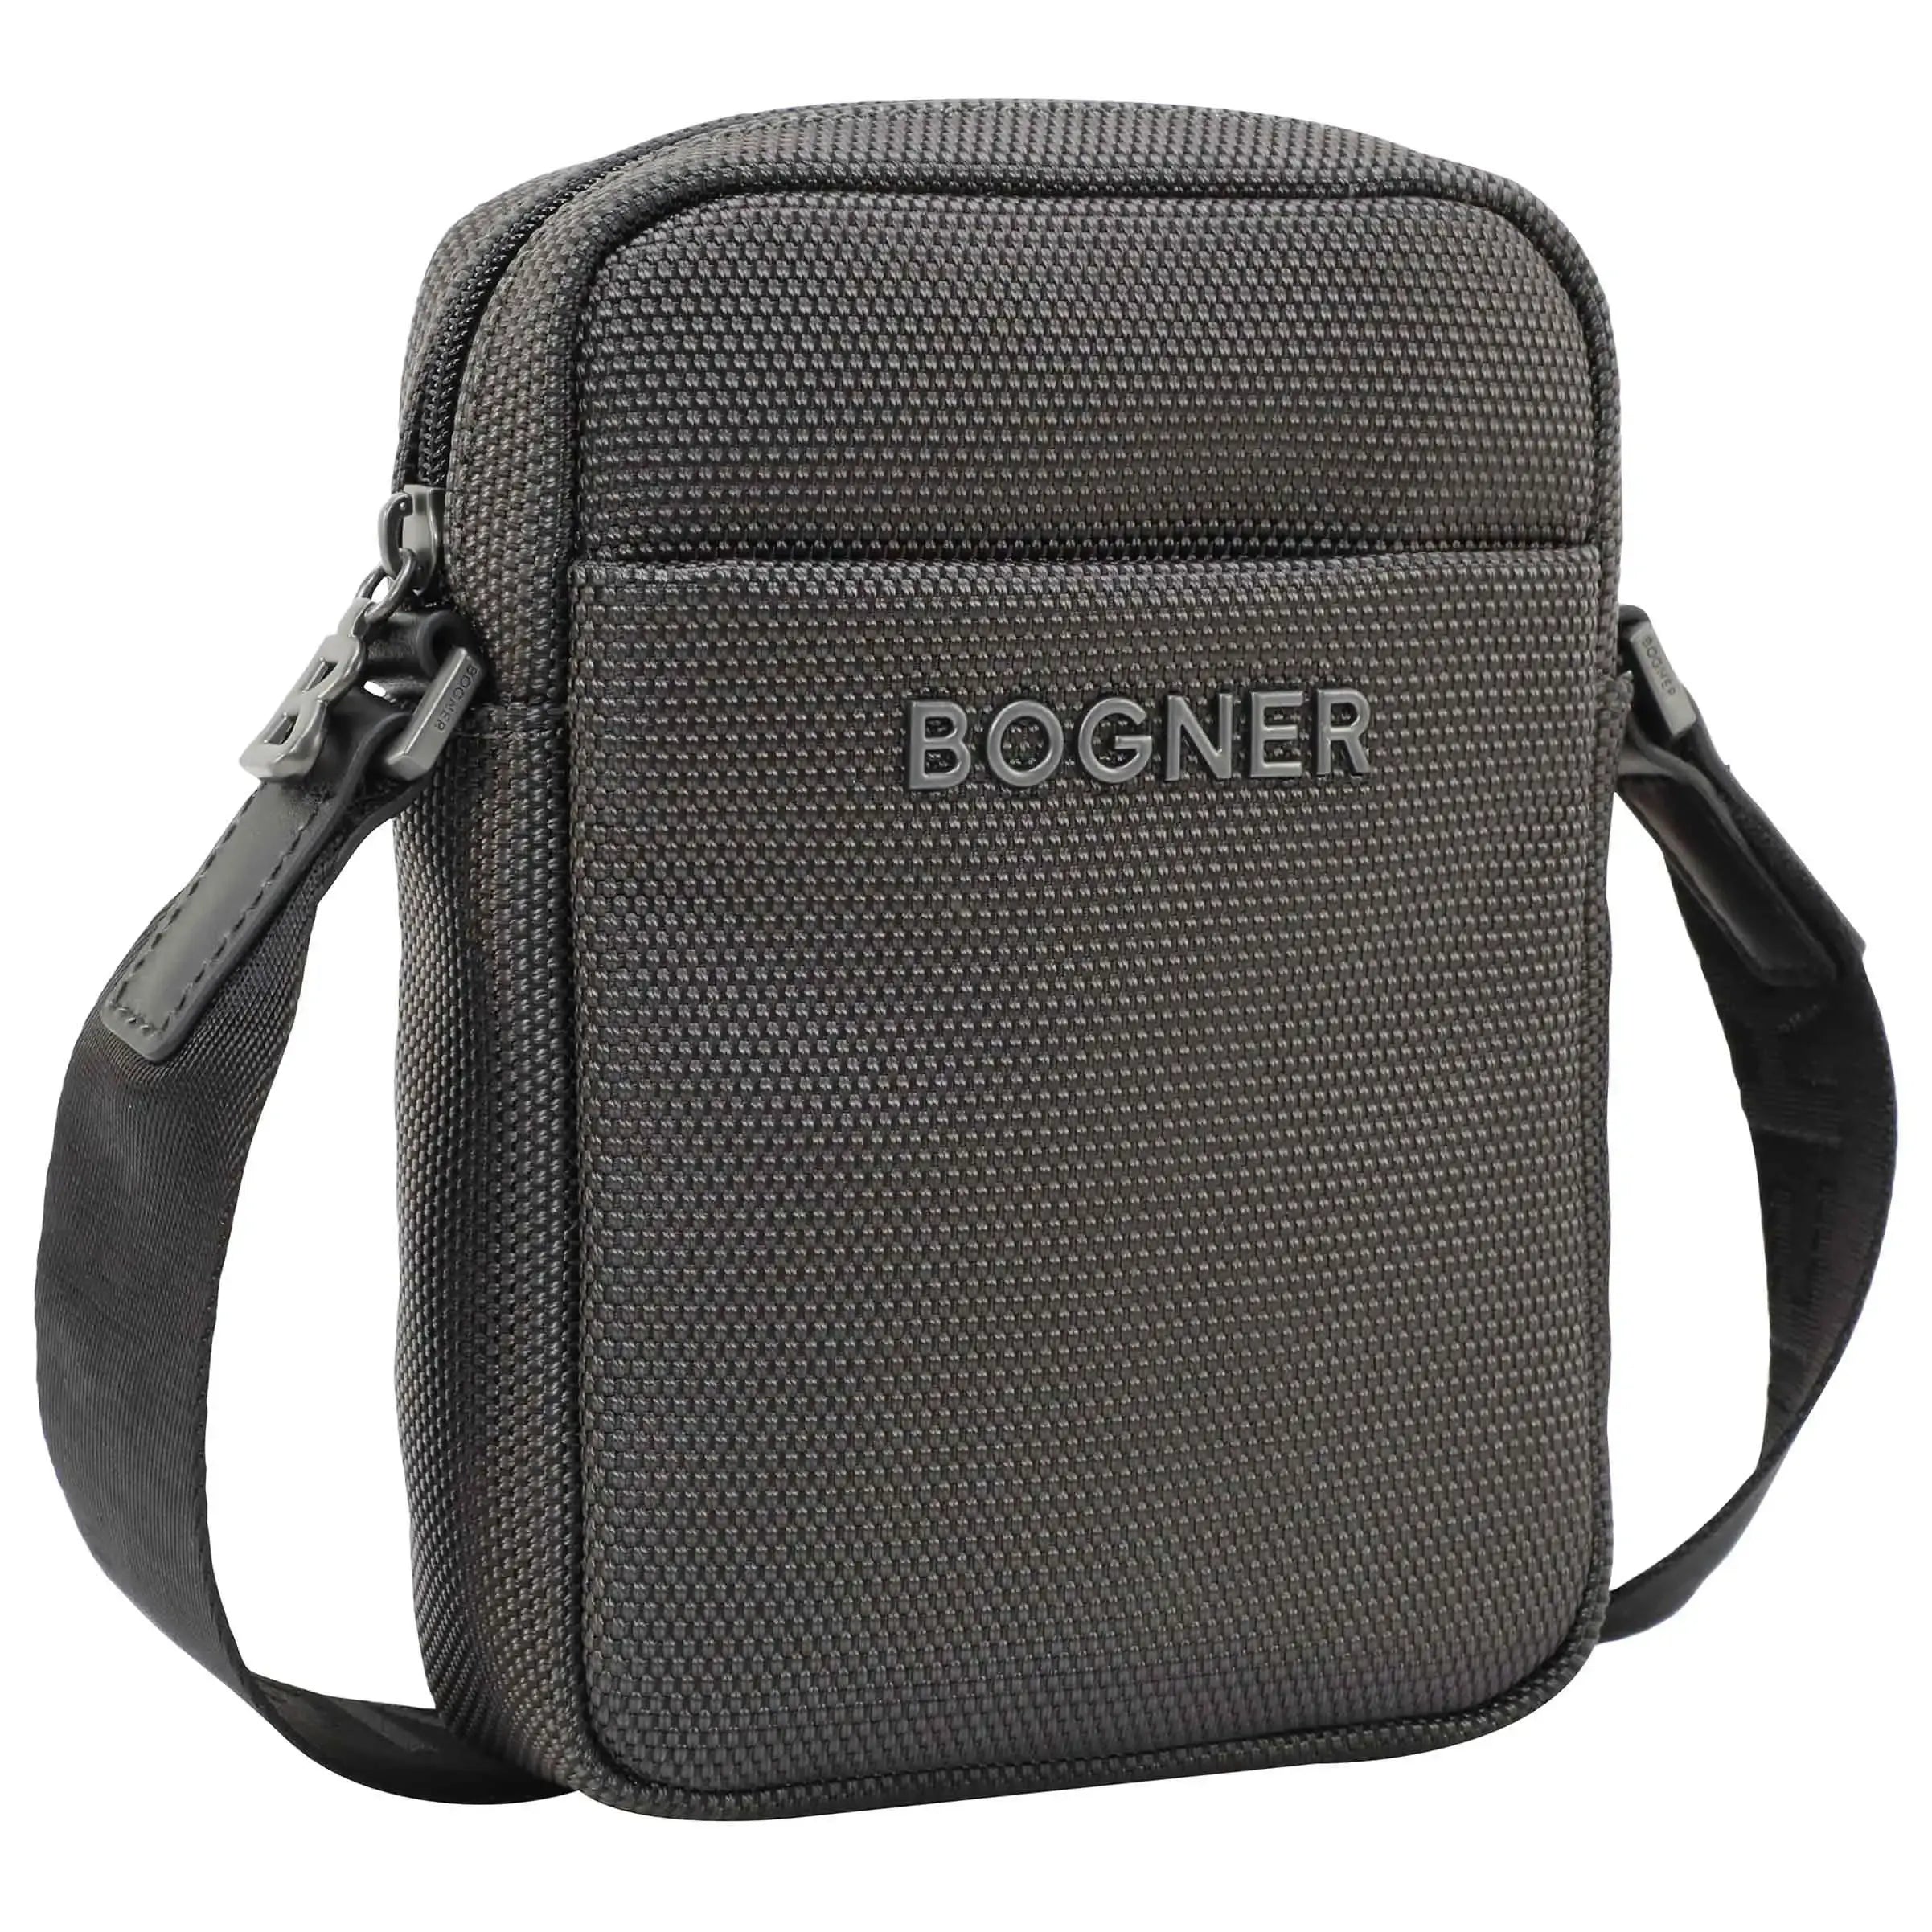 Bogner Keystone Mats Shoulderbag XSVZ - darkgrey